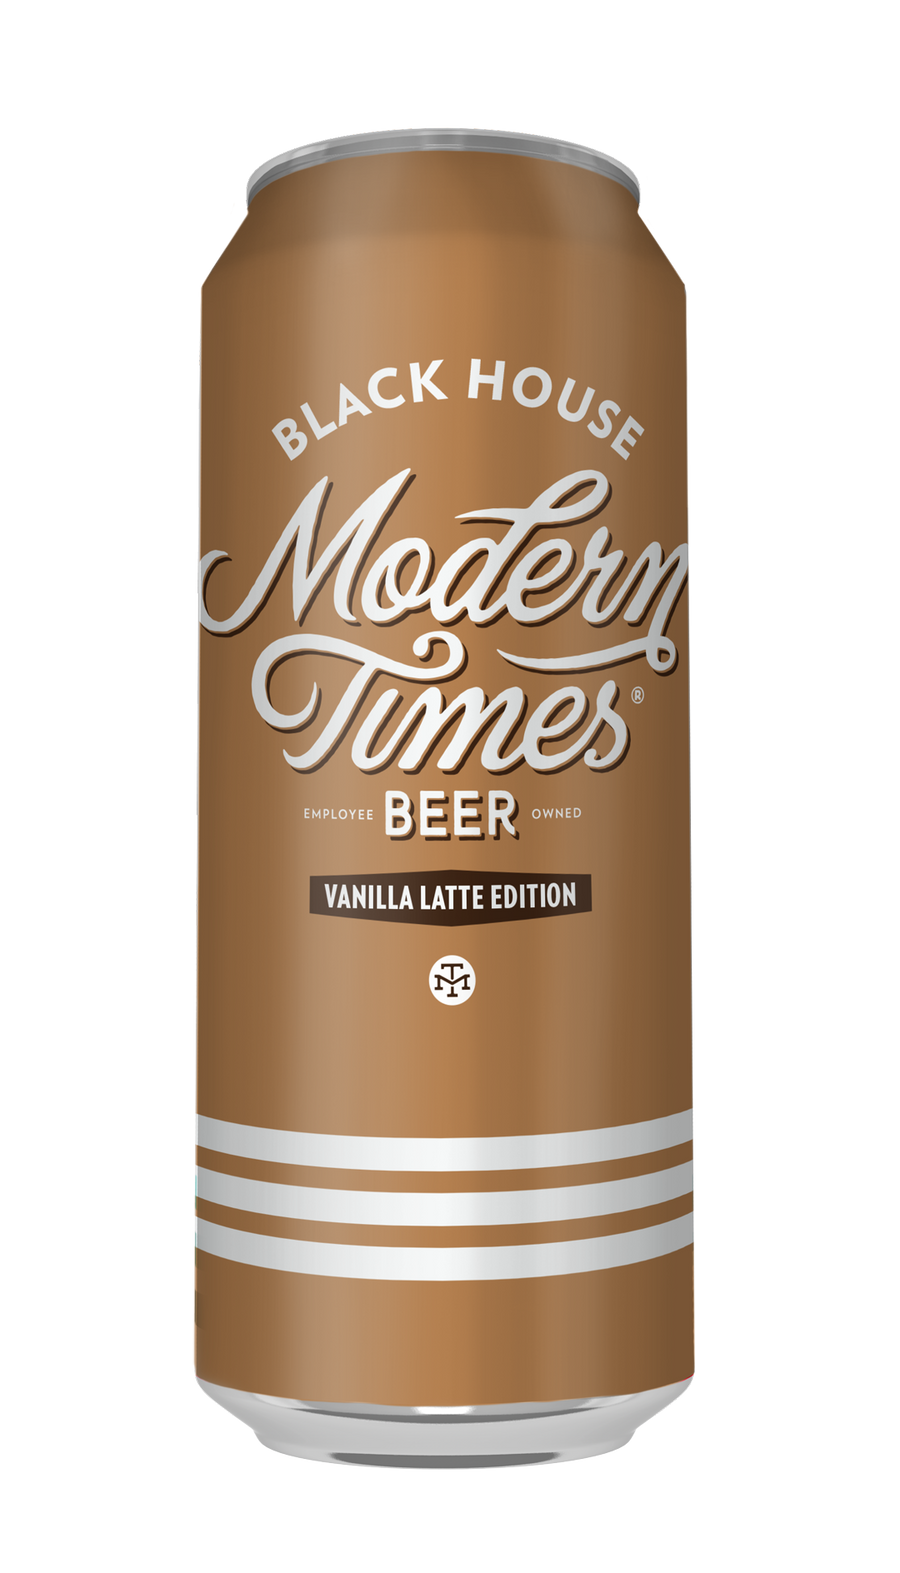 Buy Modern Times Black House Vanilla Latte Online -Craft City